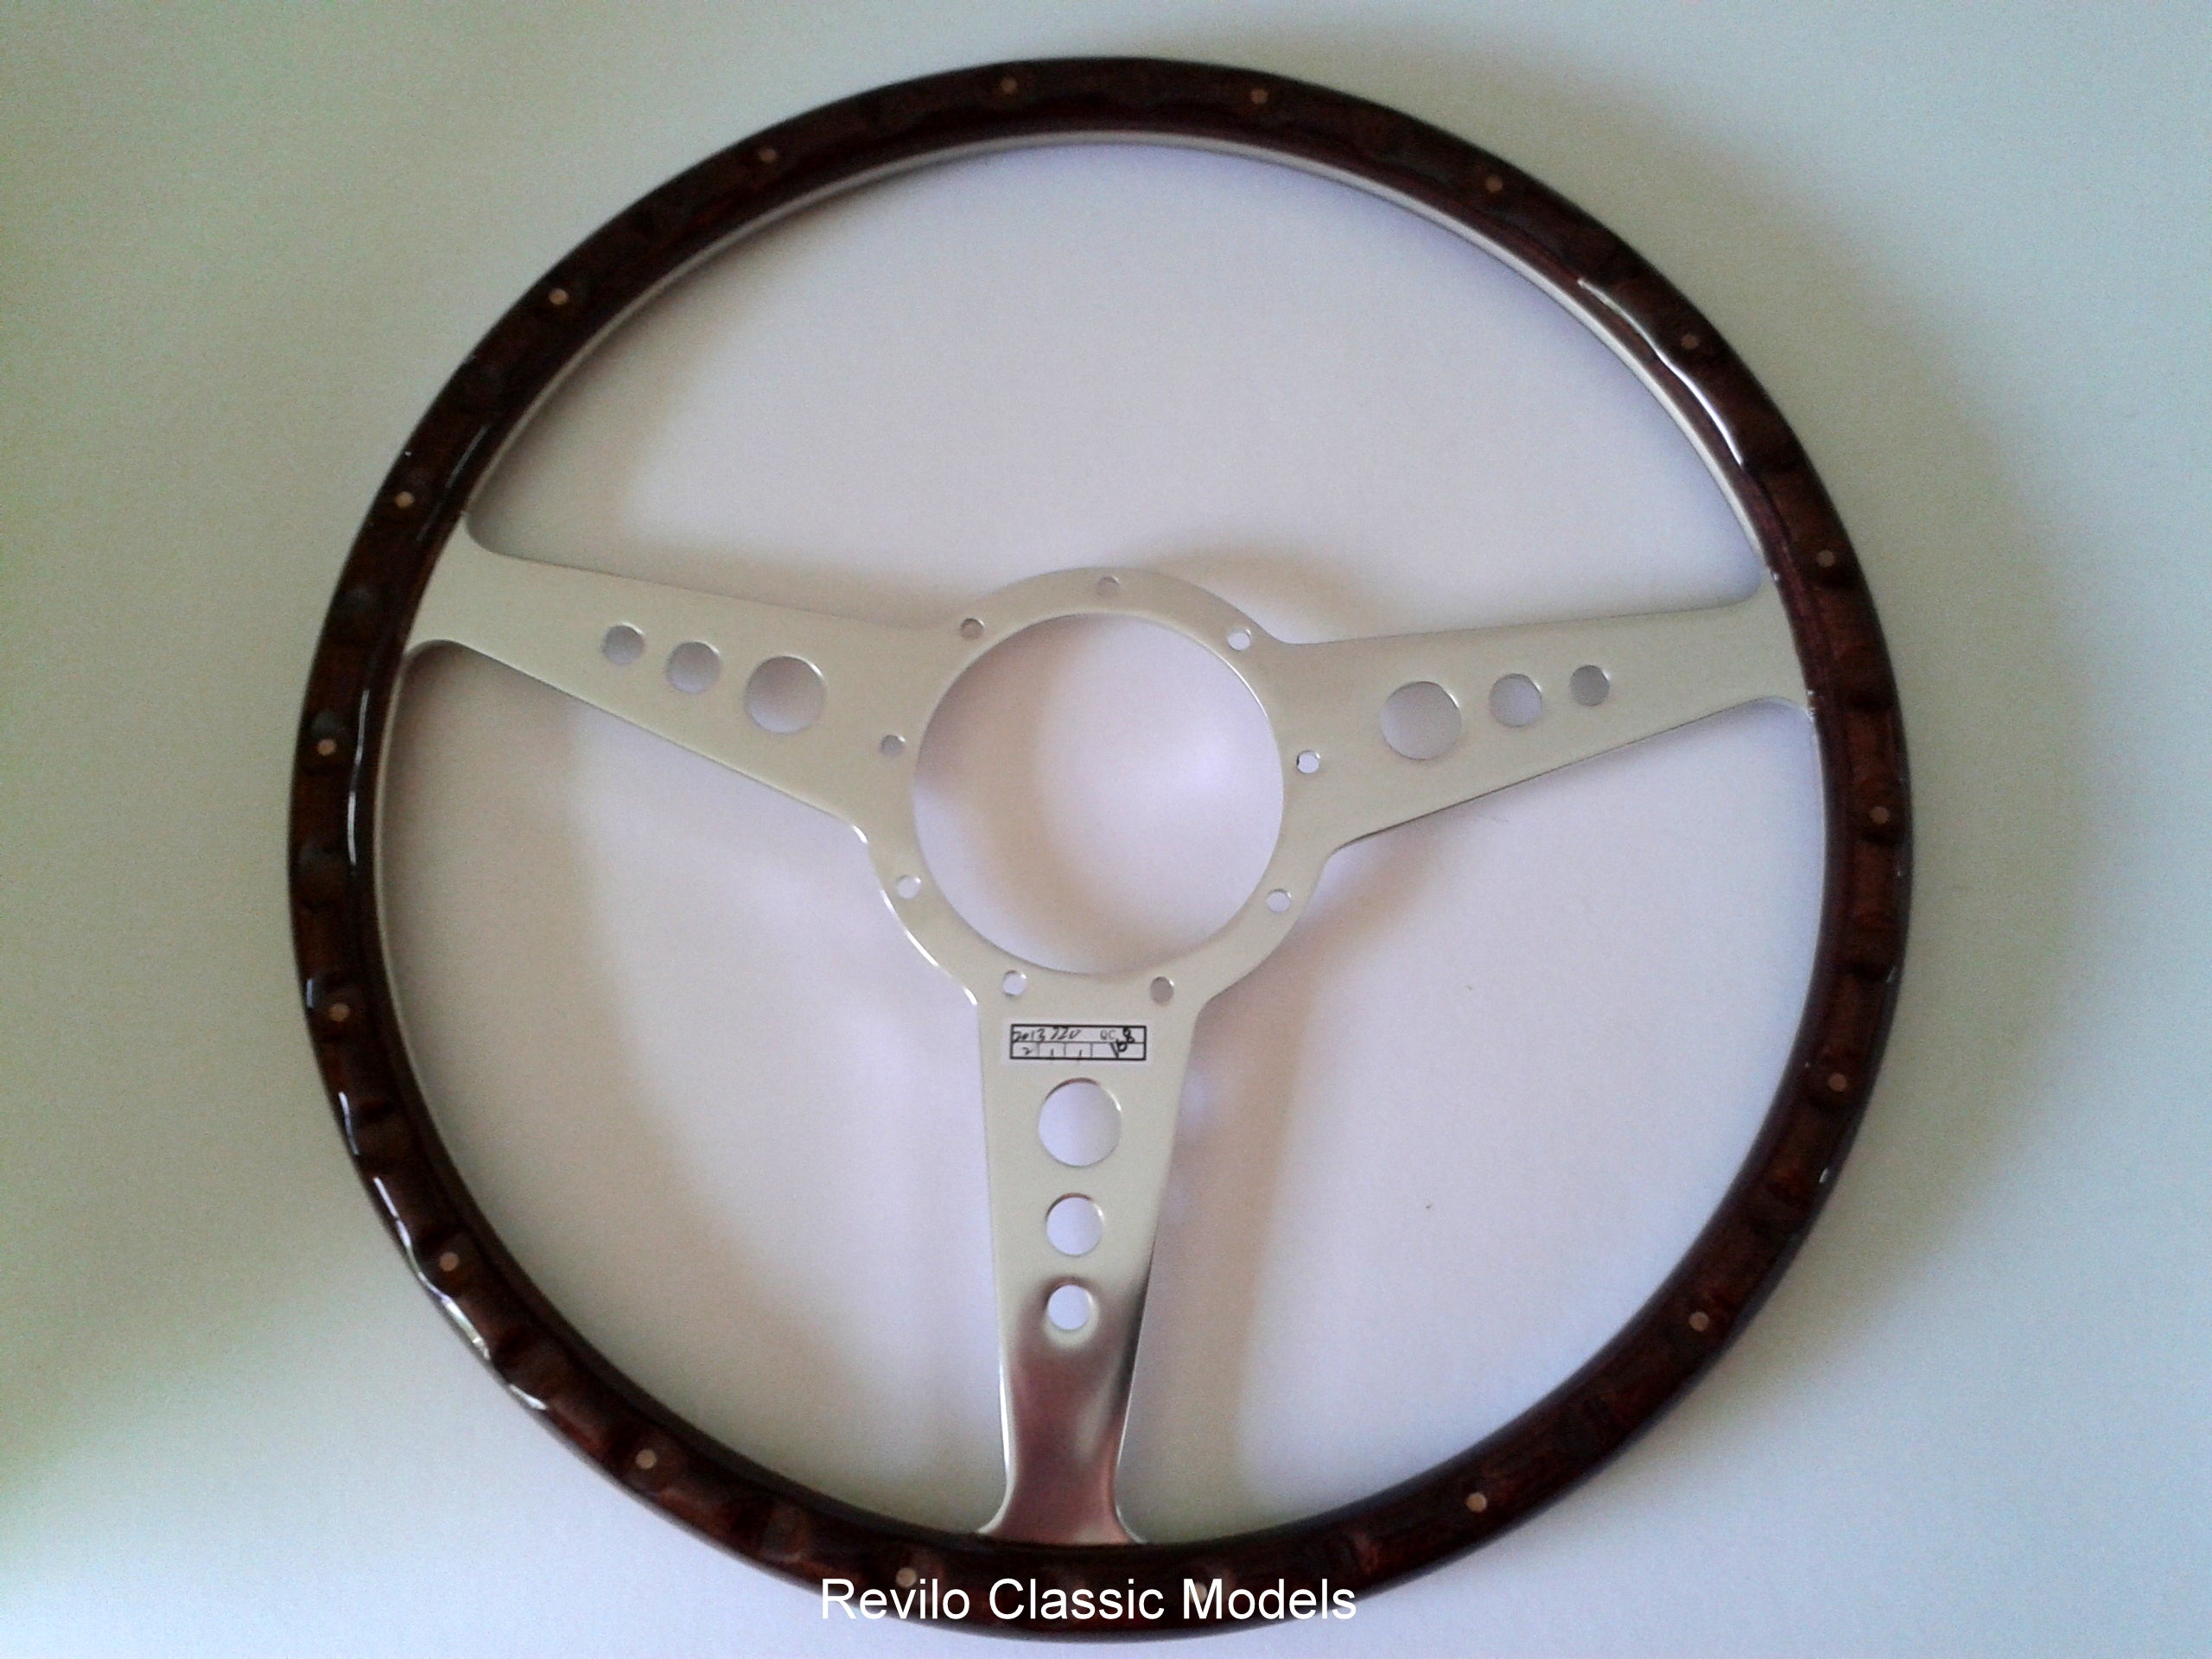 Stirling Moss SIGNED steering wheel